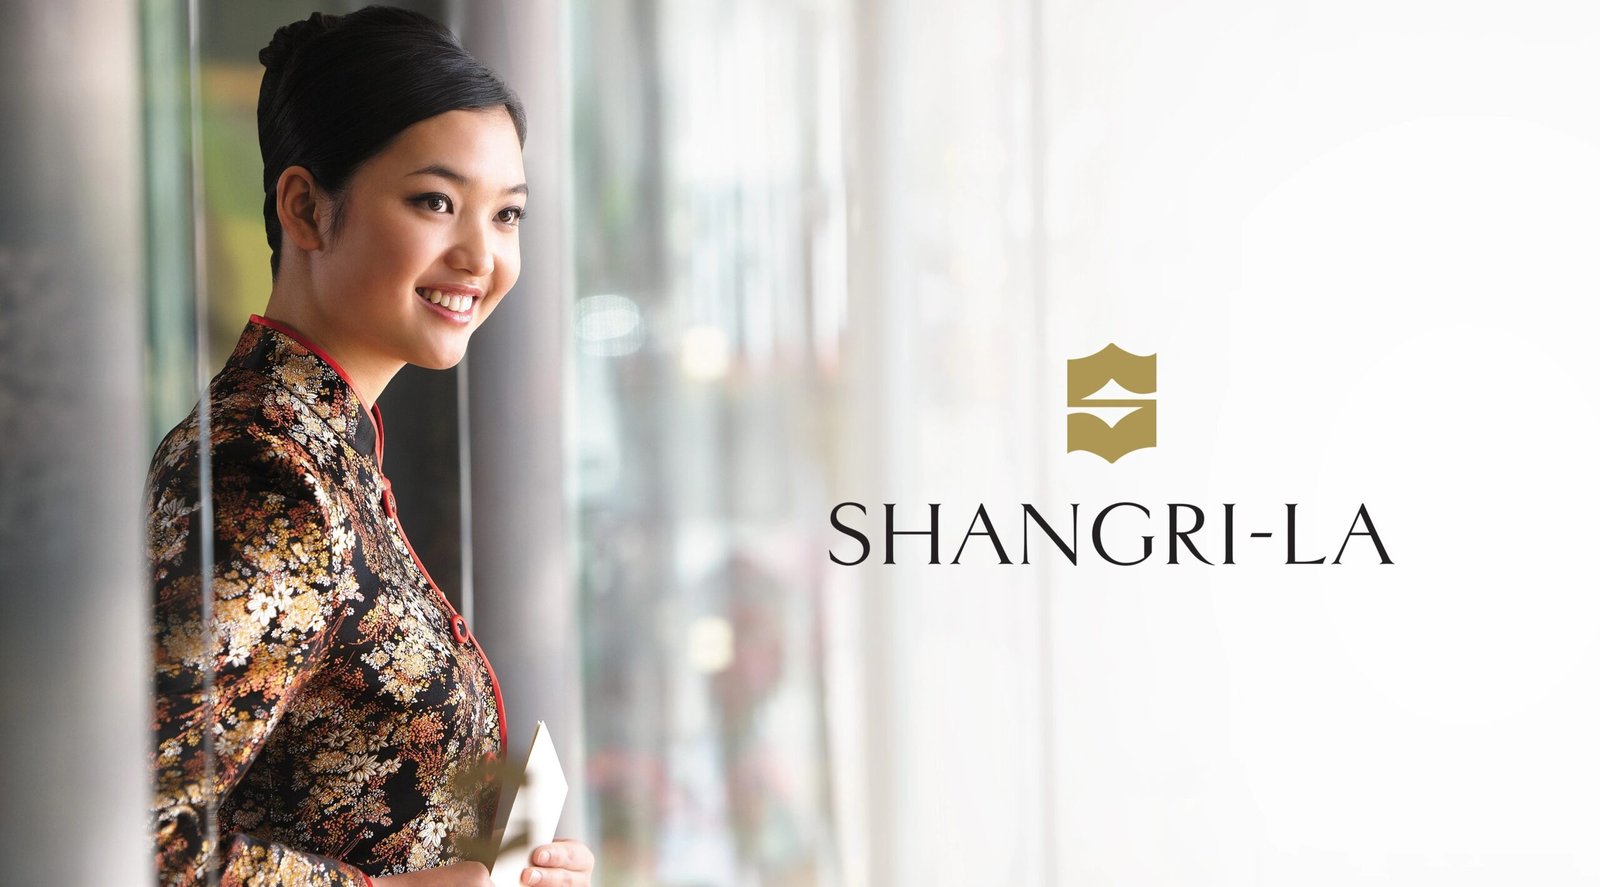 SWOT analysis of Shangri-La Hotels & Resorts